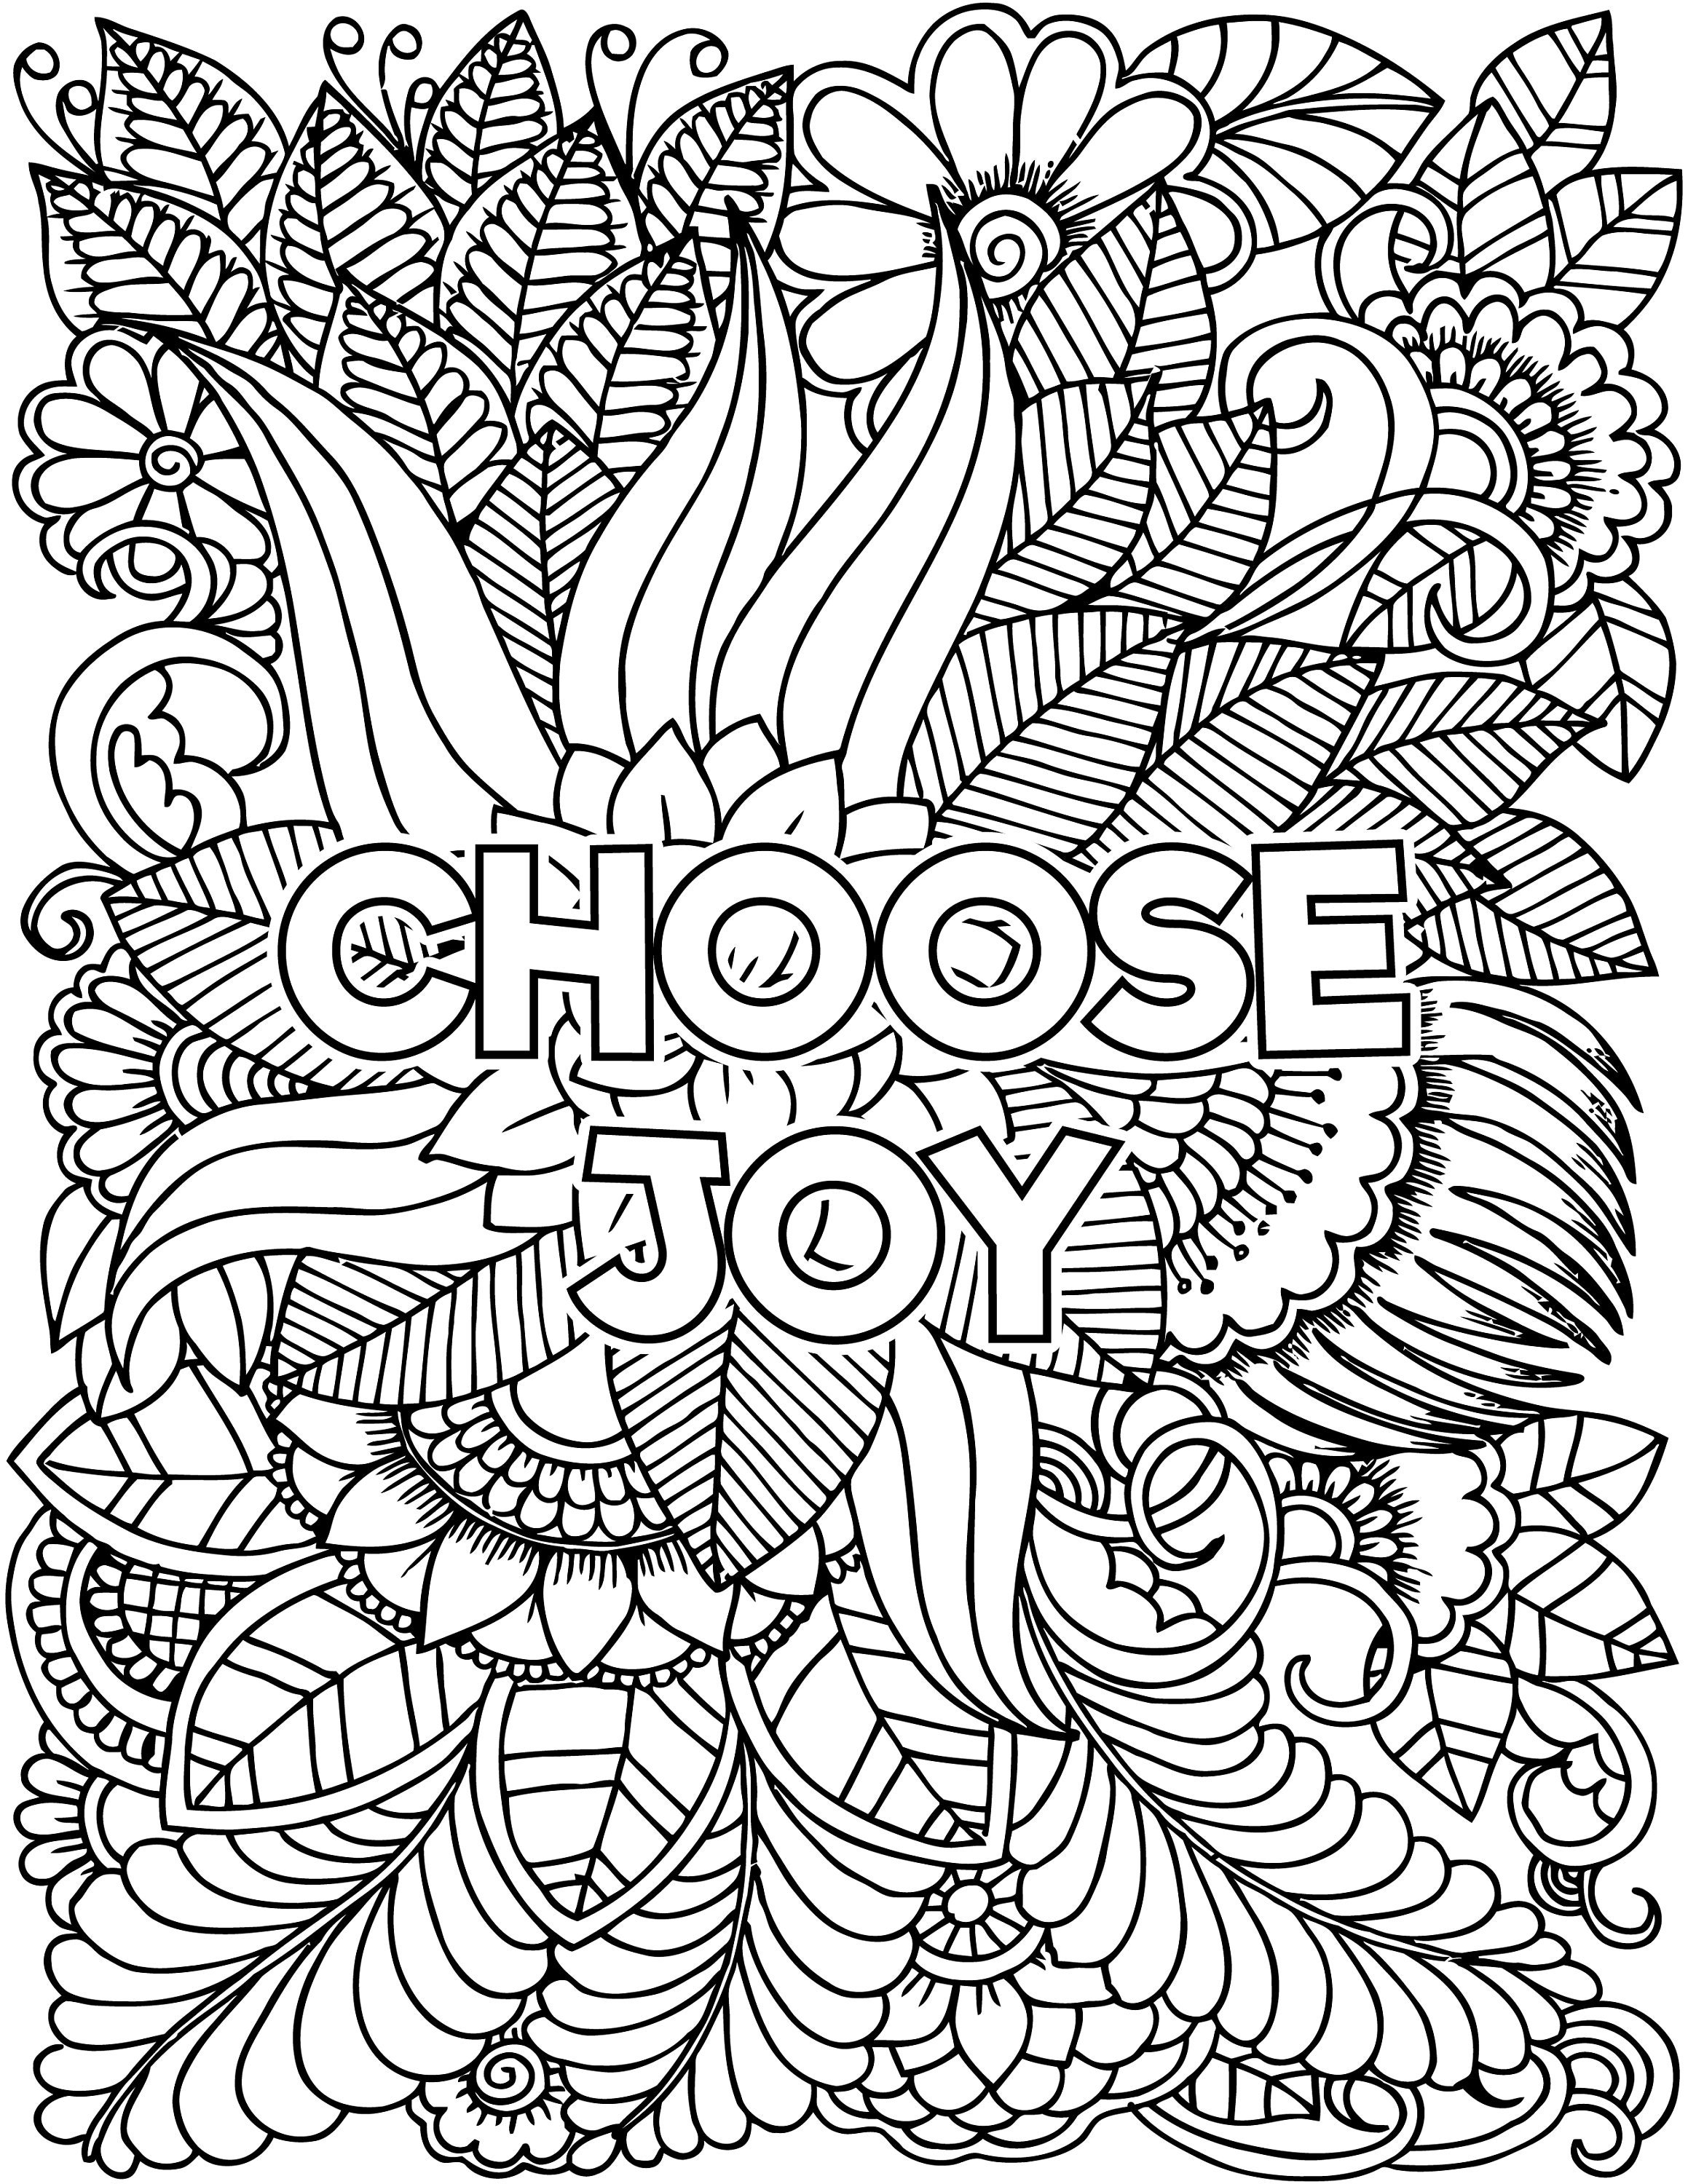 Choose joy coloring page digital download